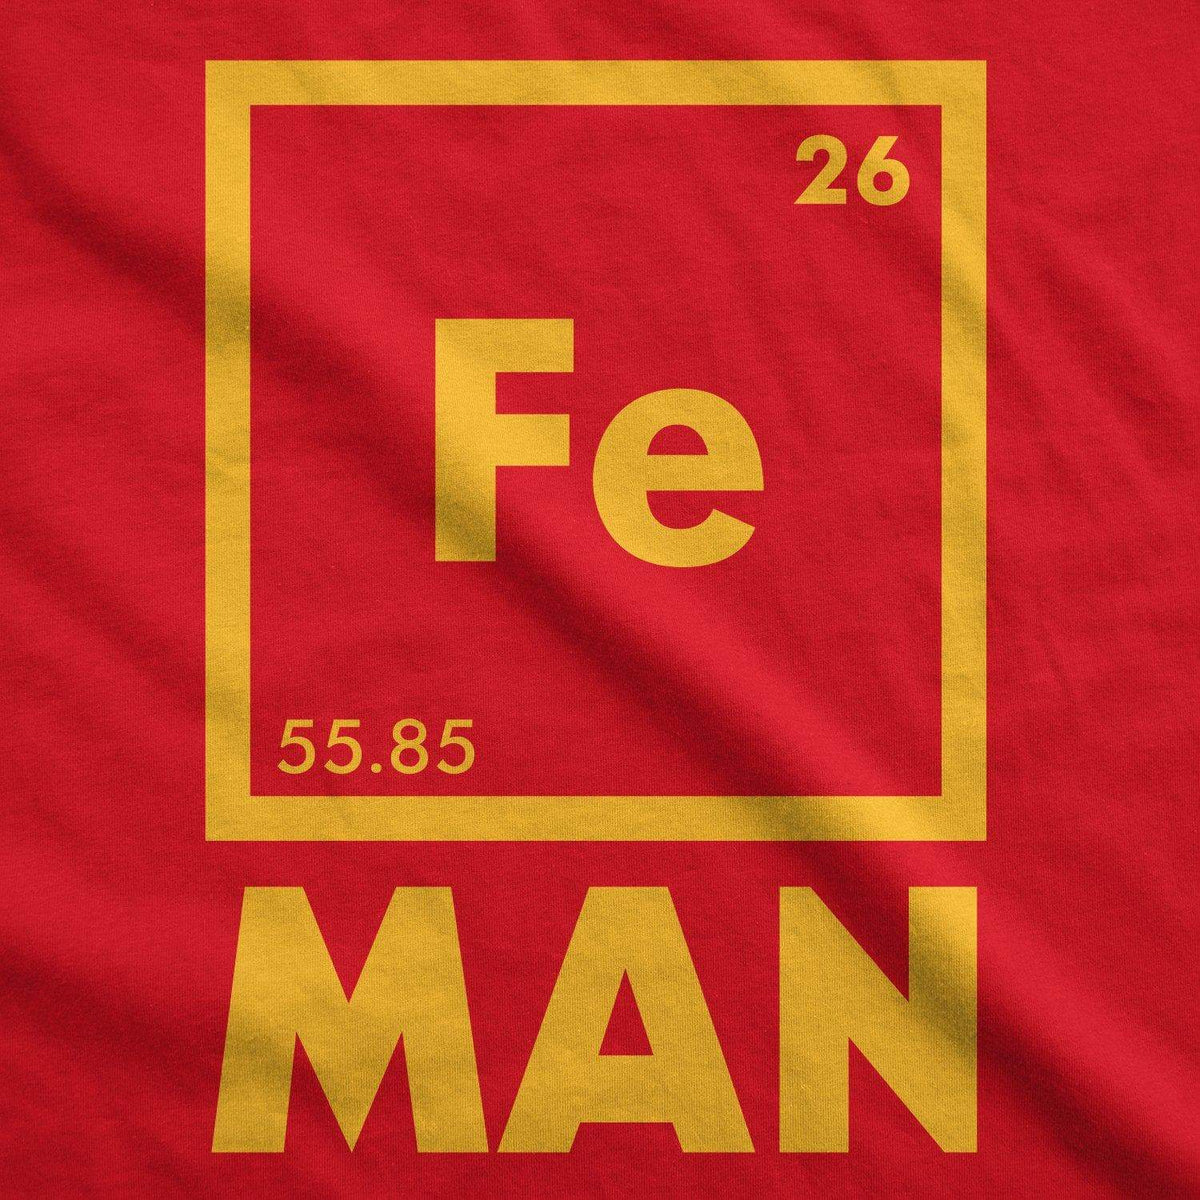 Iron Man Science Youth Tshirt  -  Crazy Dog T-Shirts